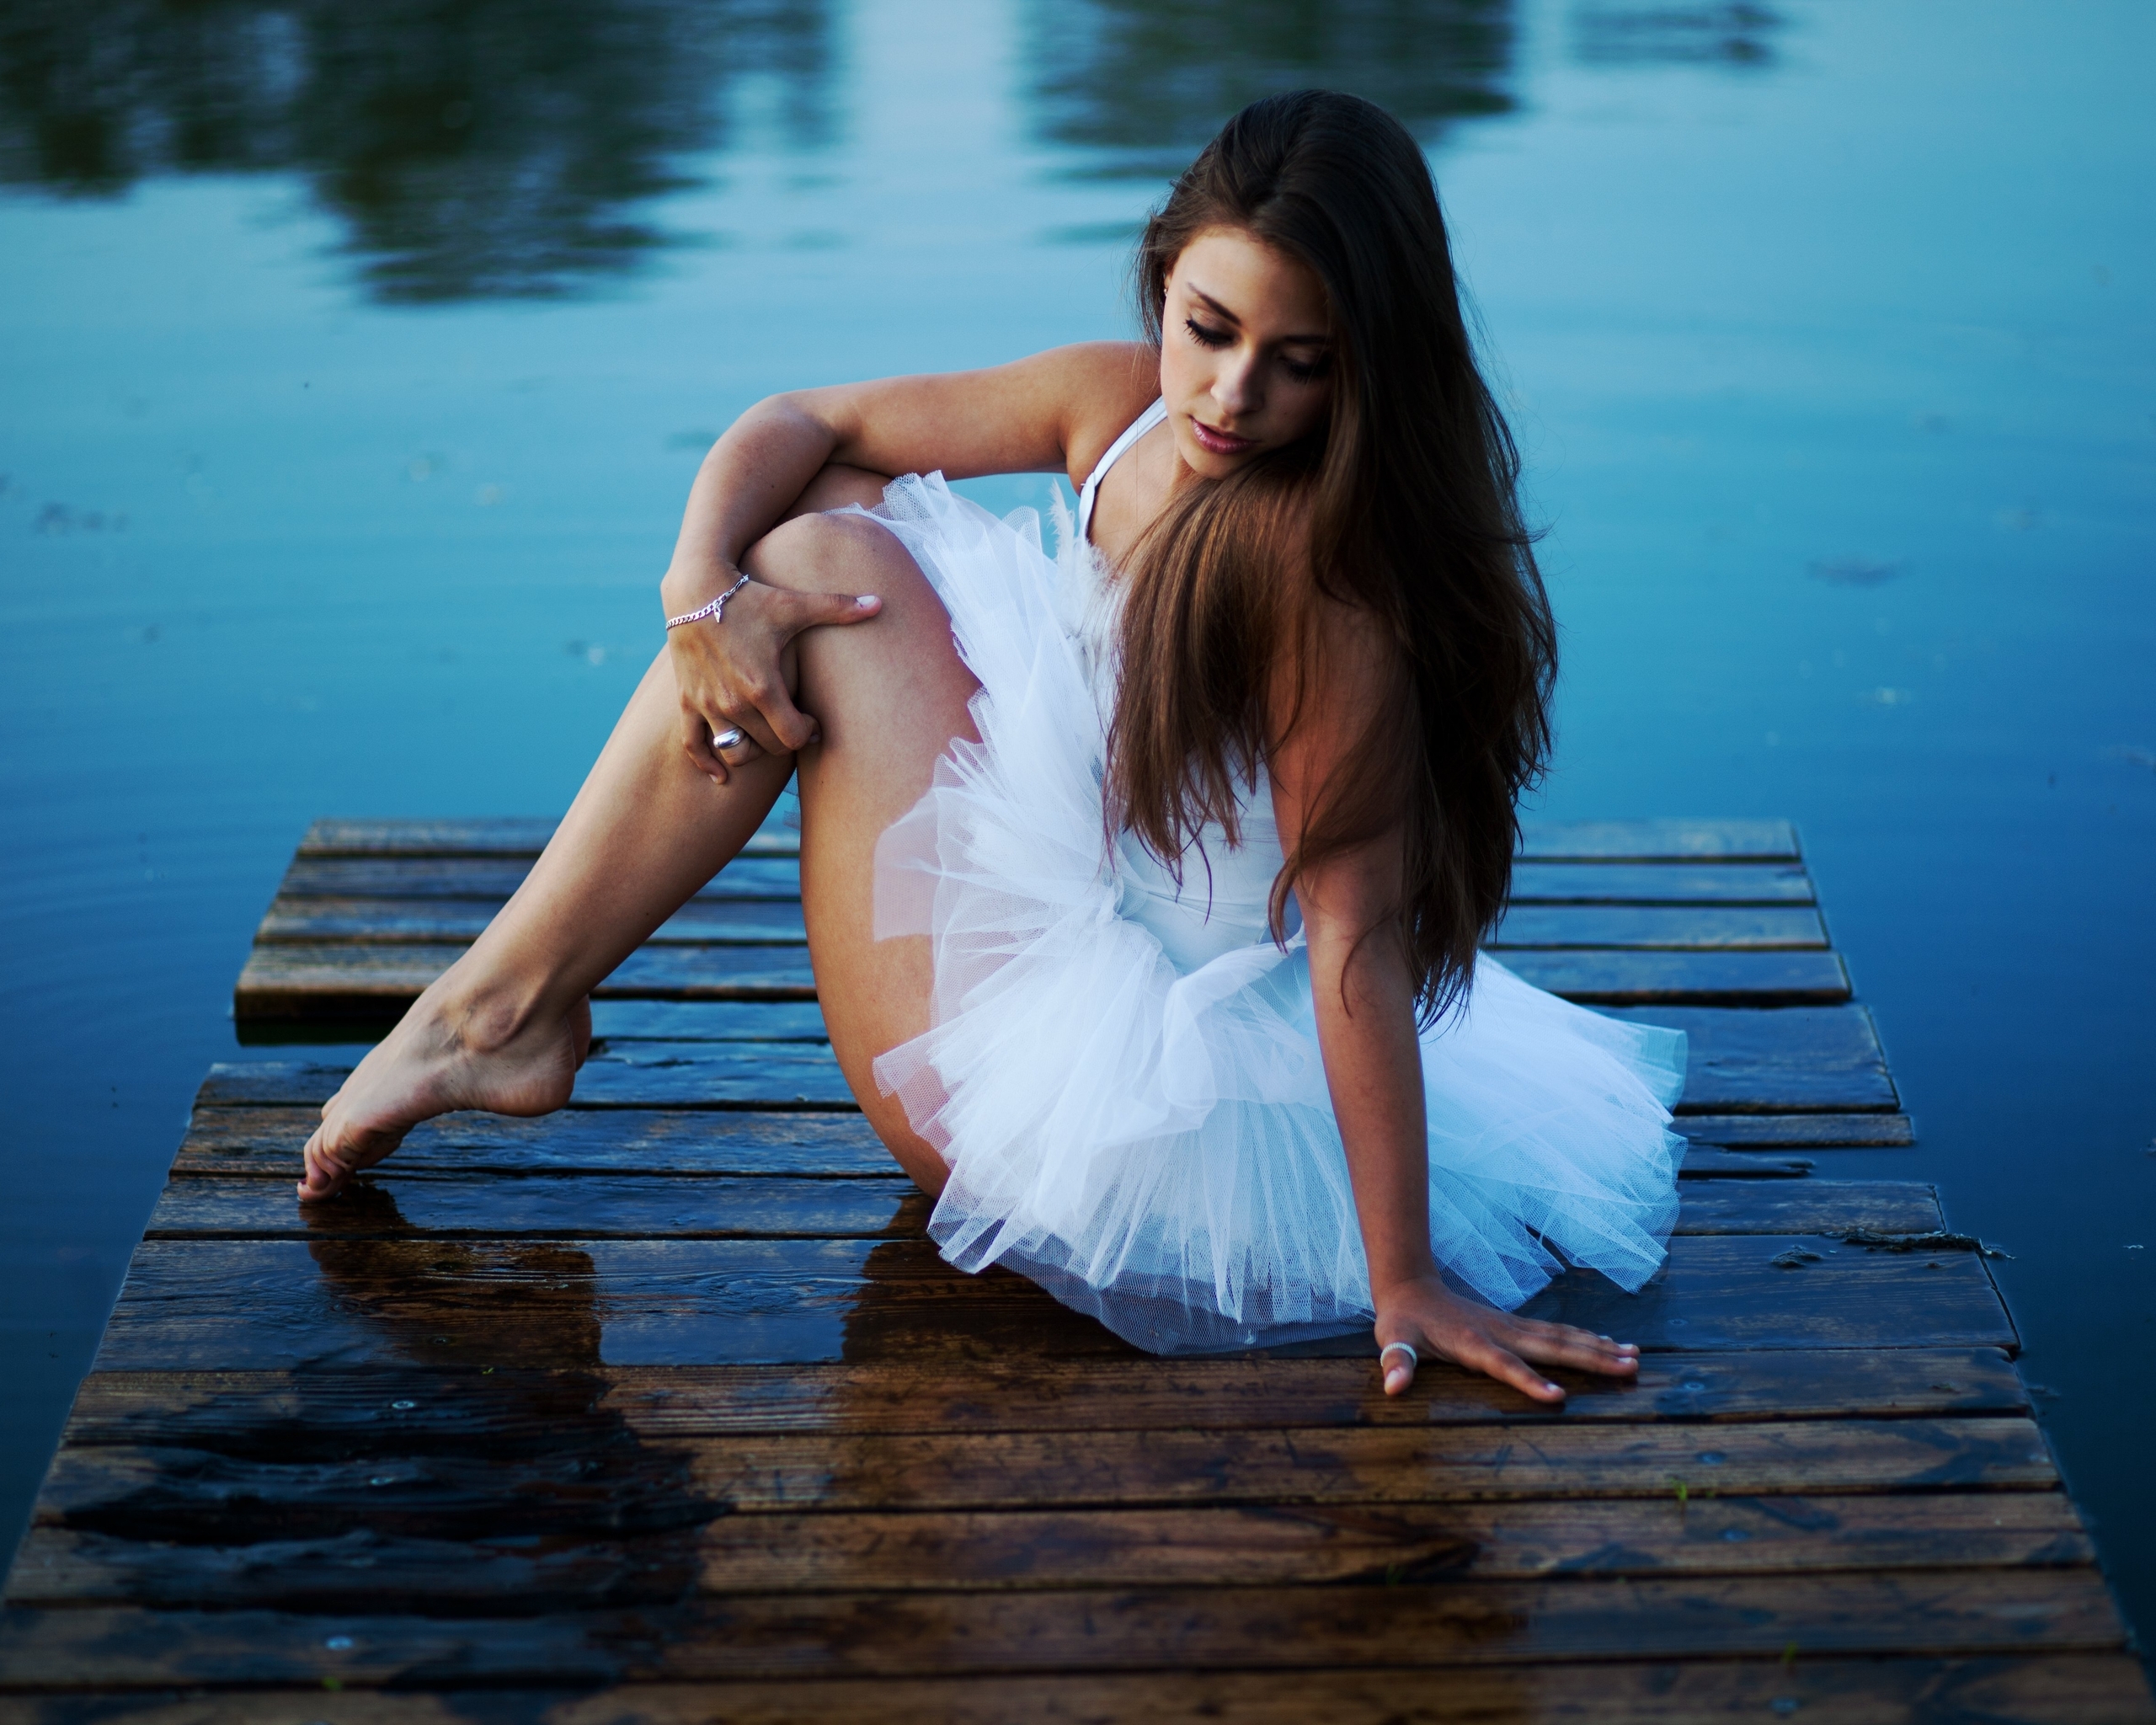 Image: Girl, ballerina, white tutu, pier, water